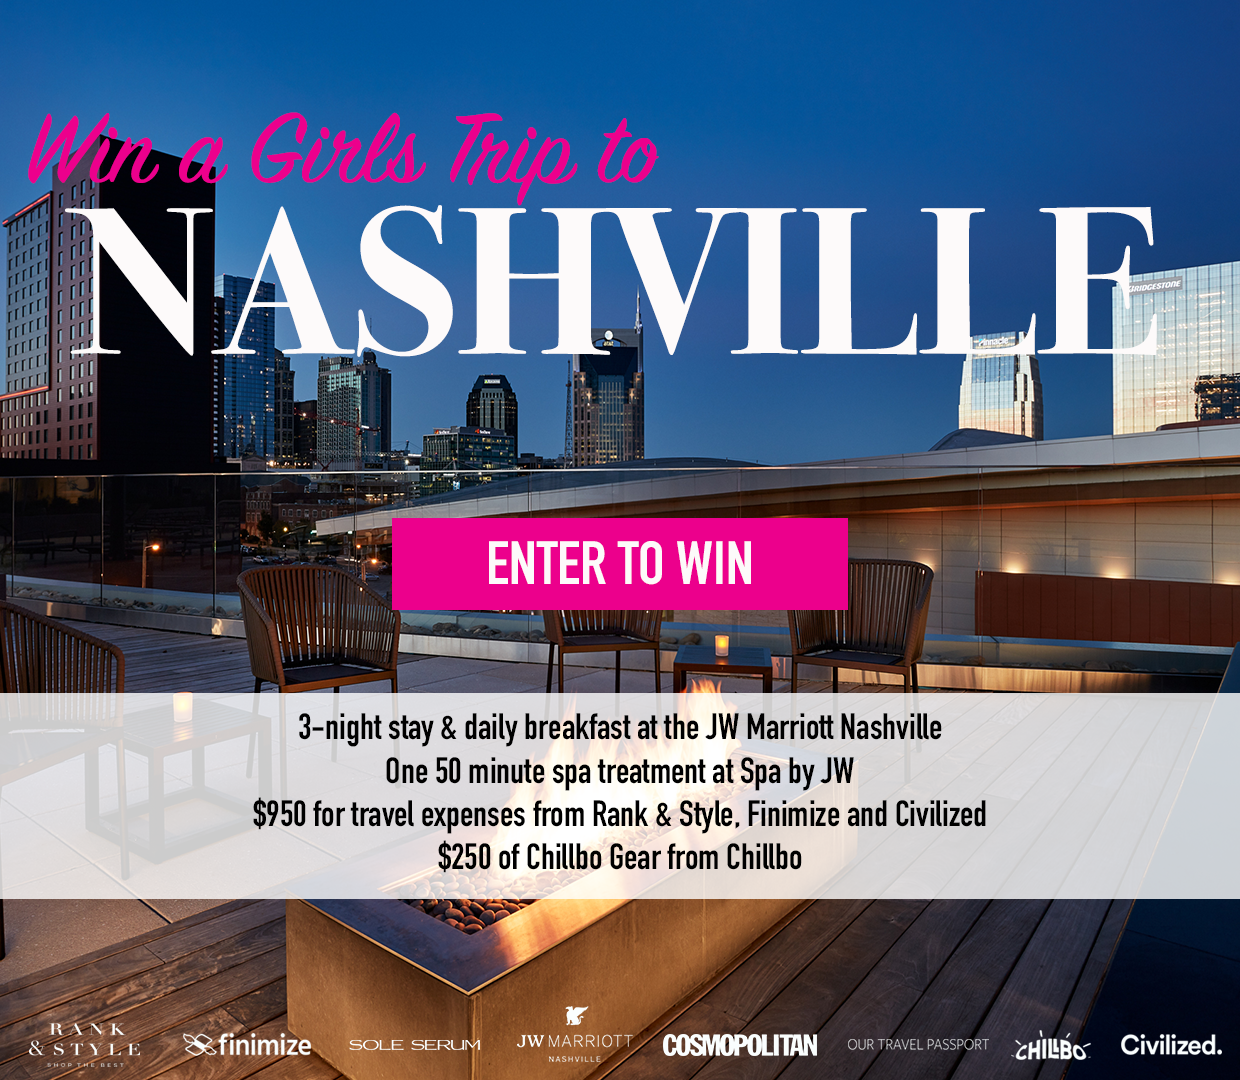 Emter to win a Fabulous Girls Trip to Nashville!